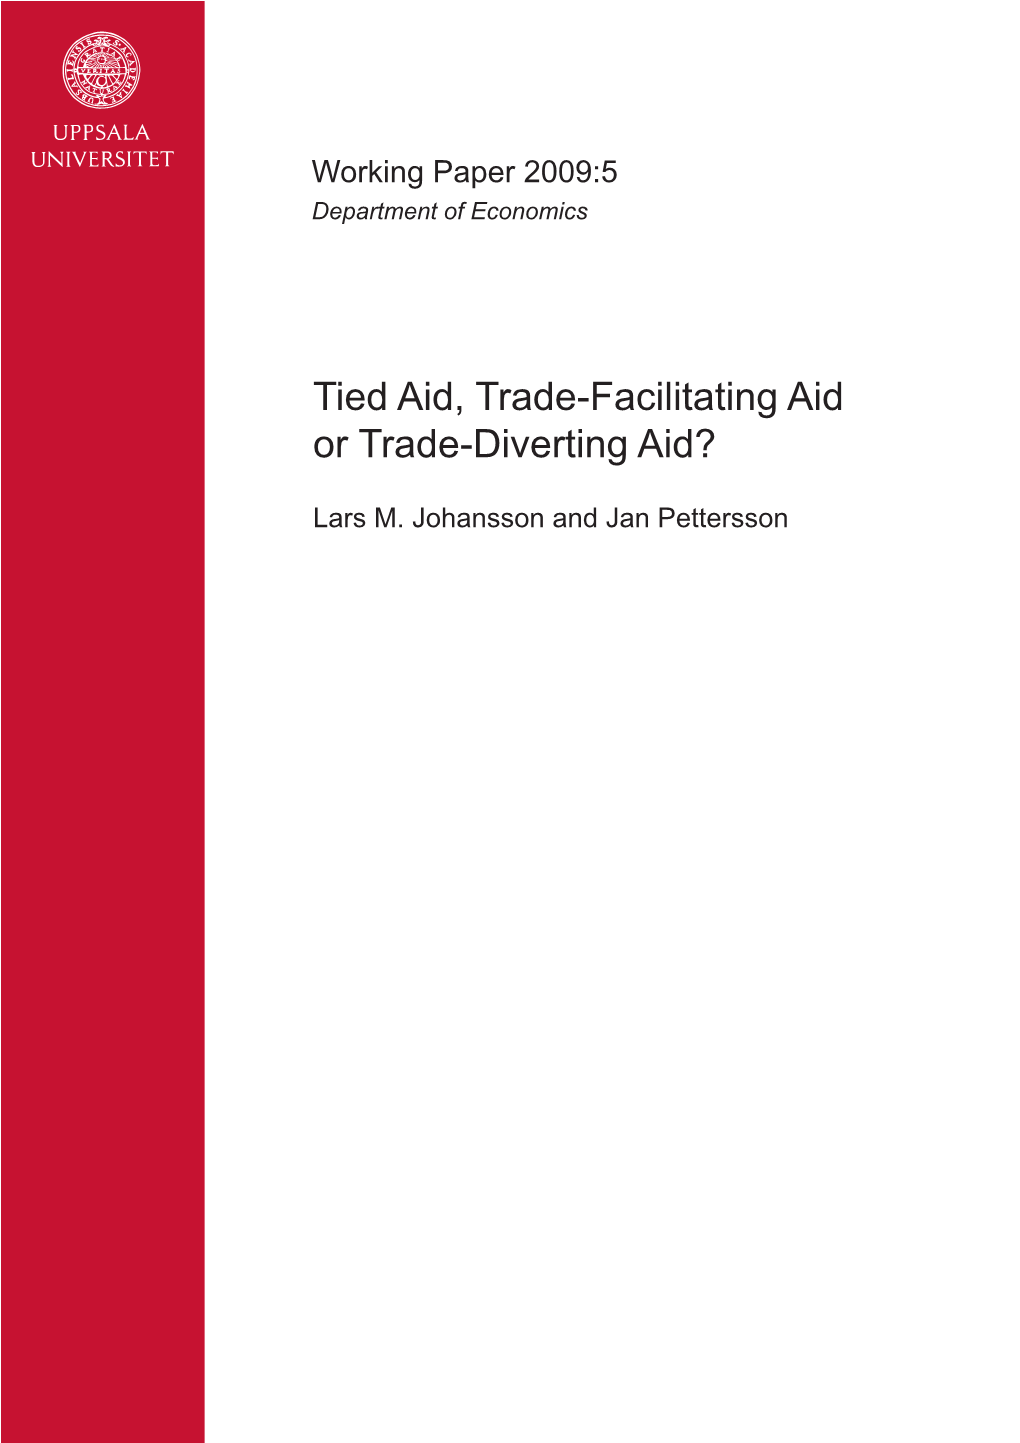 Tied Aid, Trade-Facilitating Aid Or Trade-Diverting Aid?